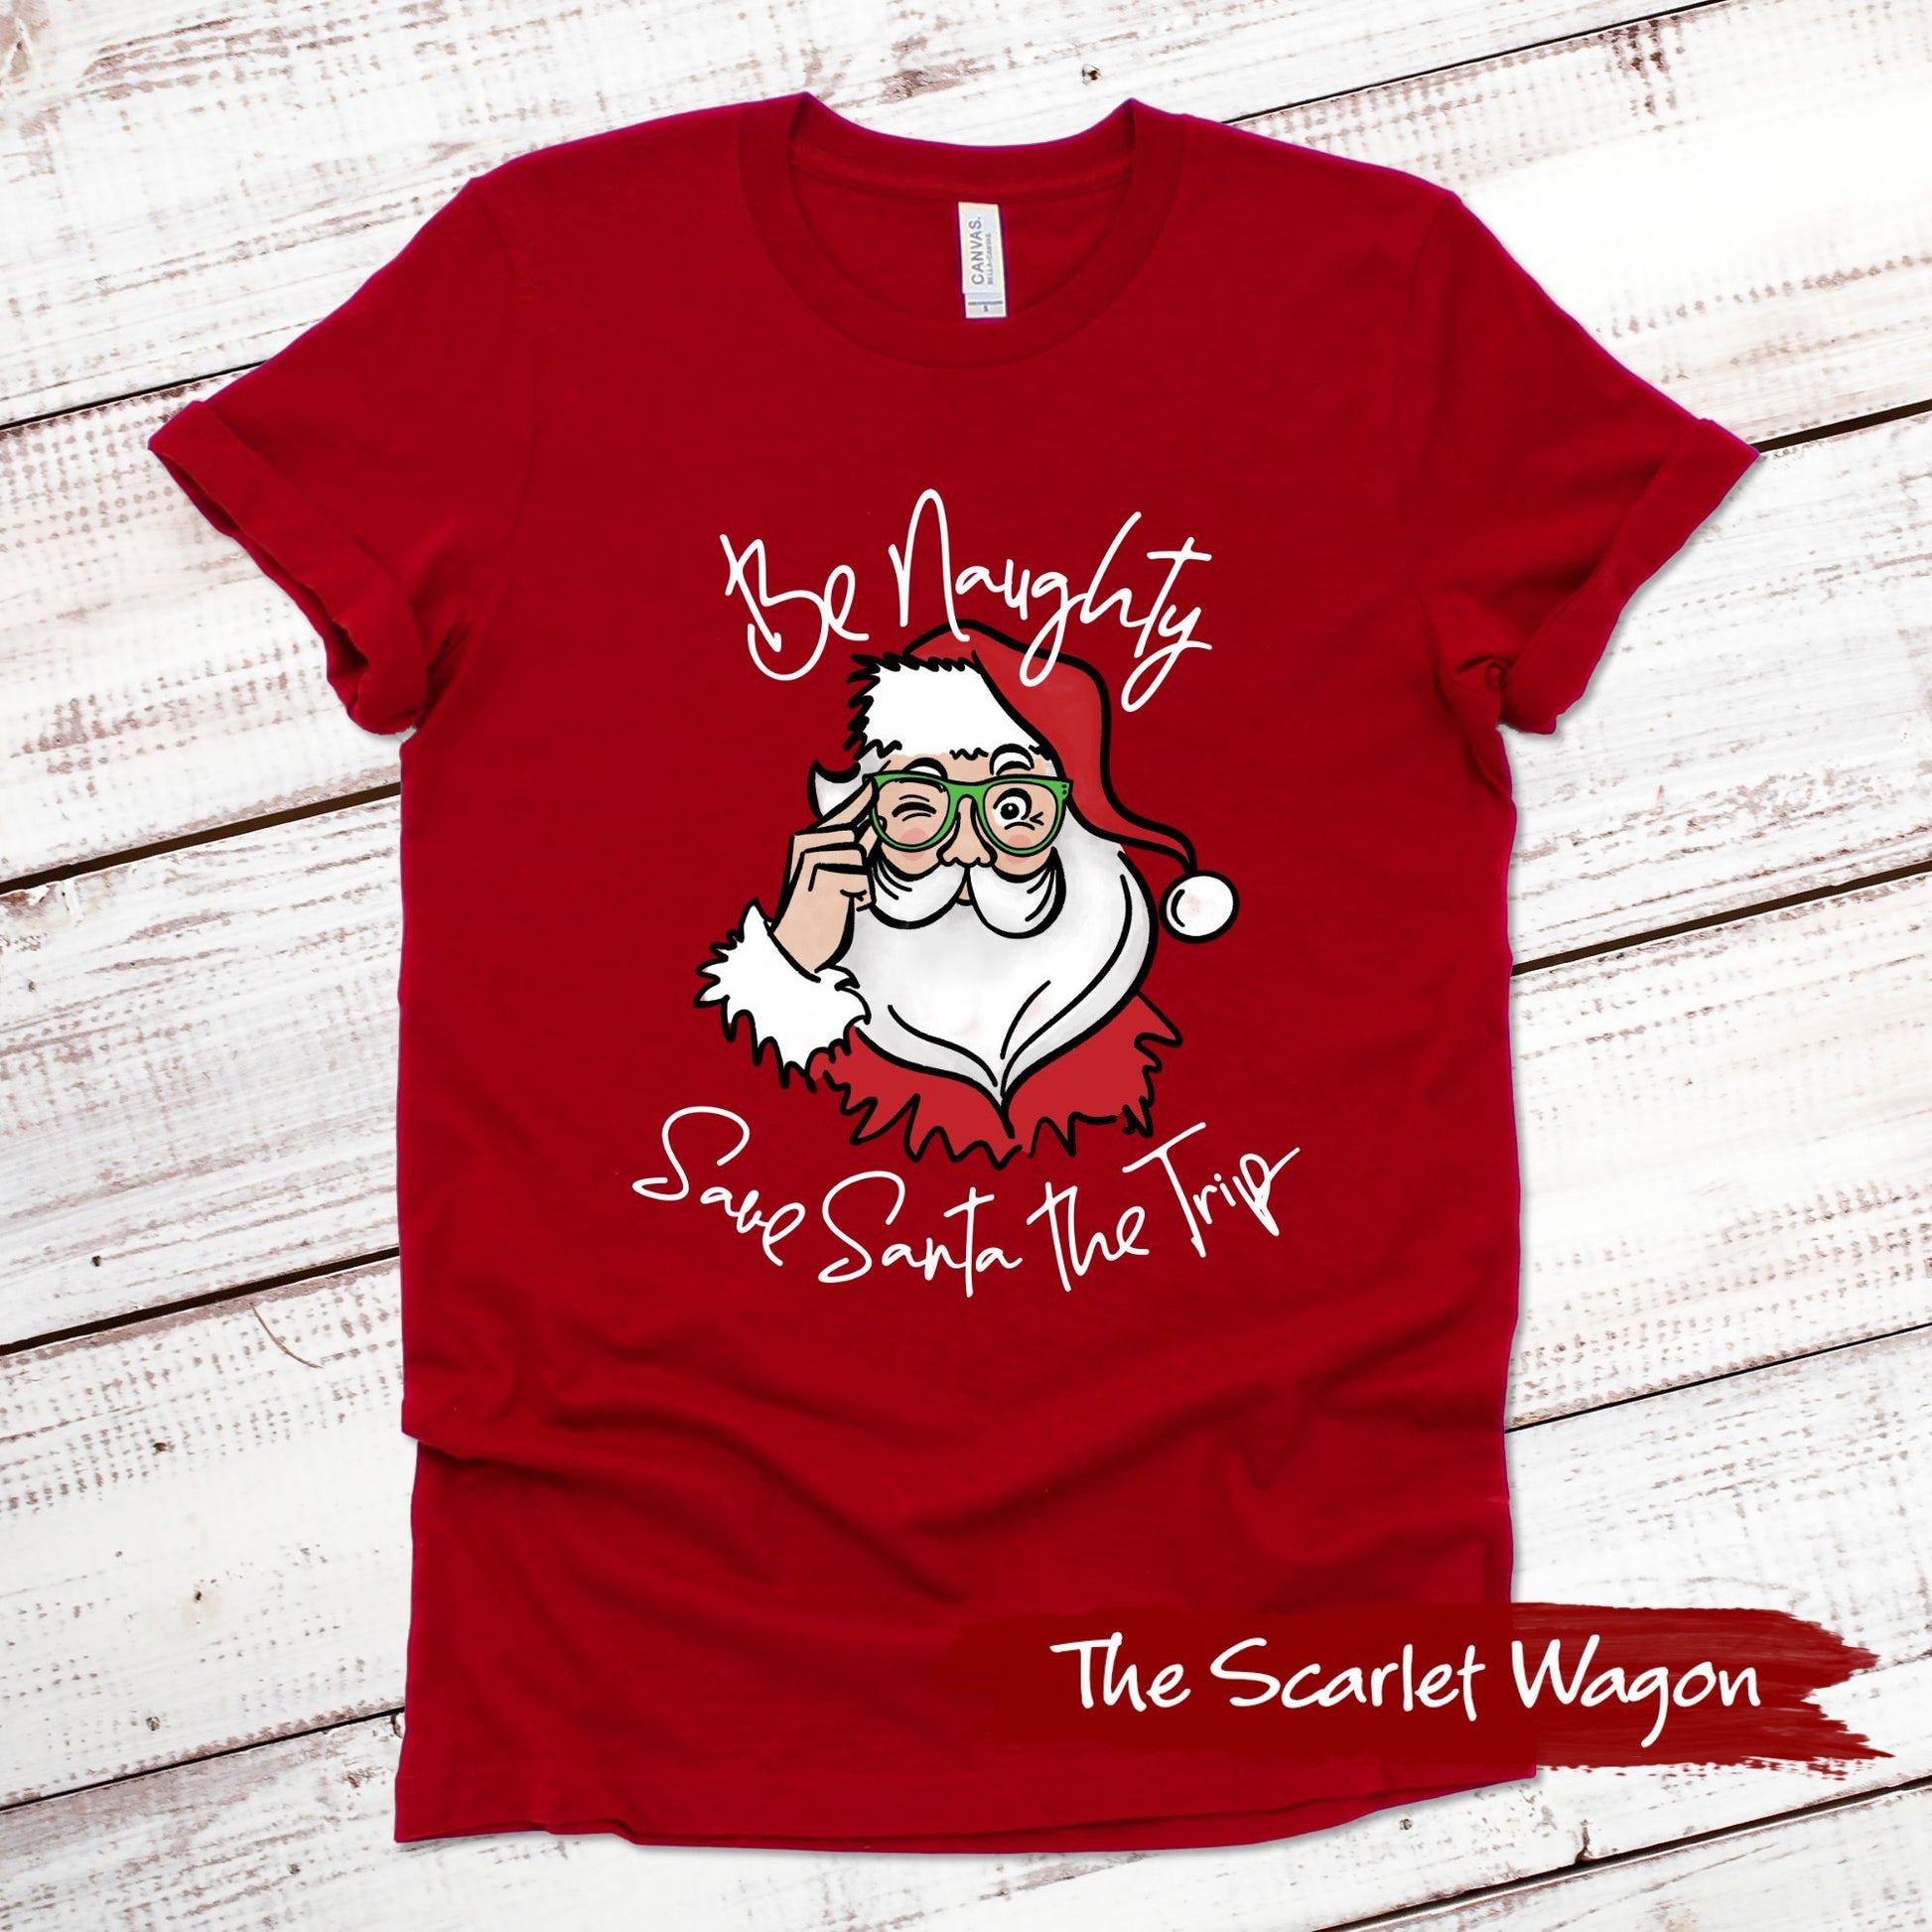 Be Naughty Save Santa the Trip Christmas Shirt Scarlet Wagon Red XS 